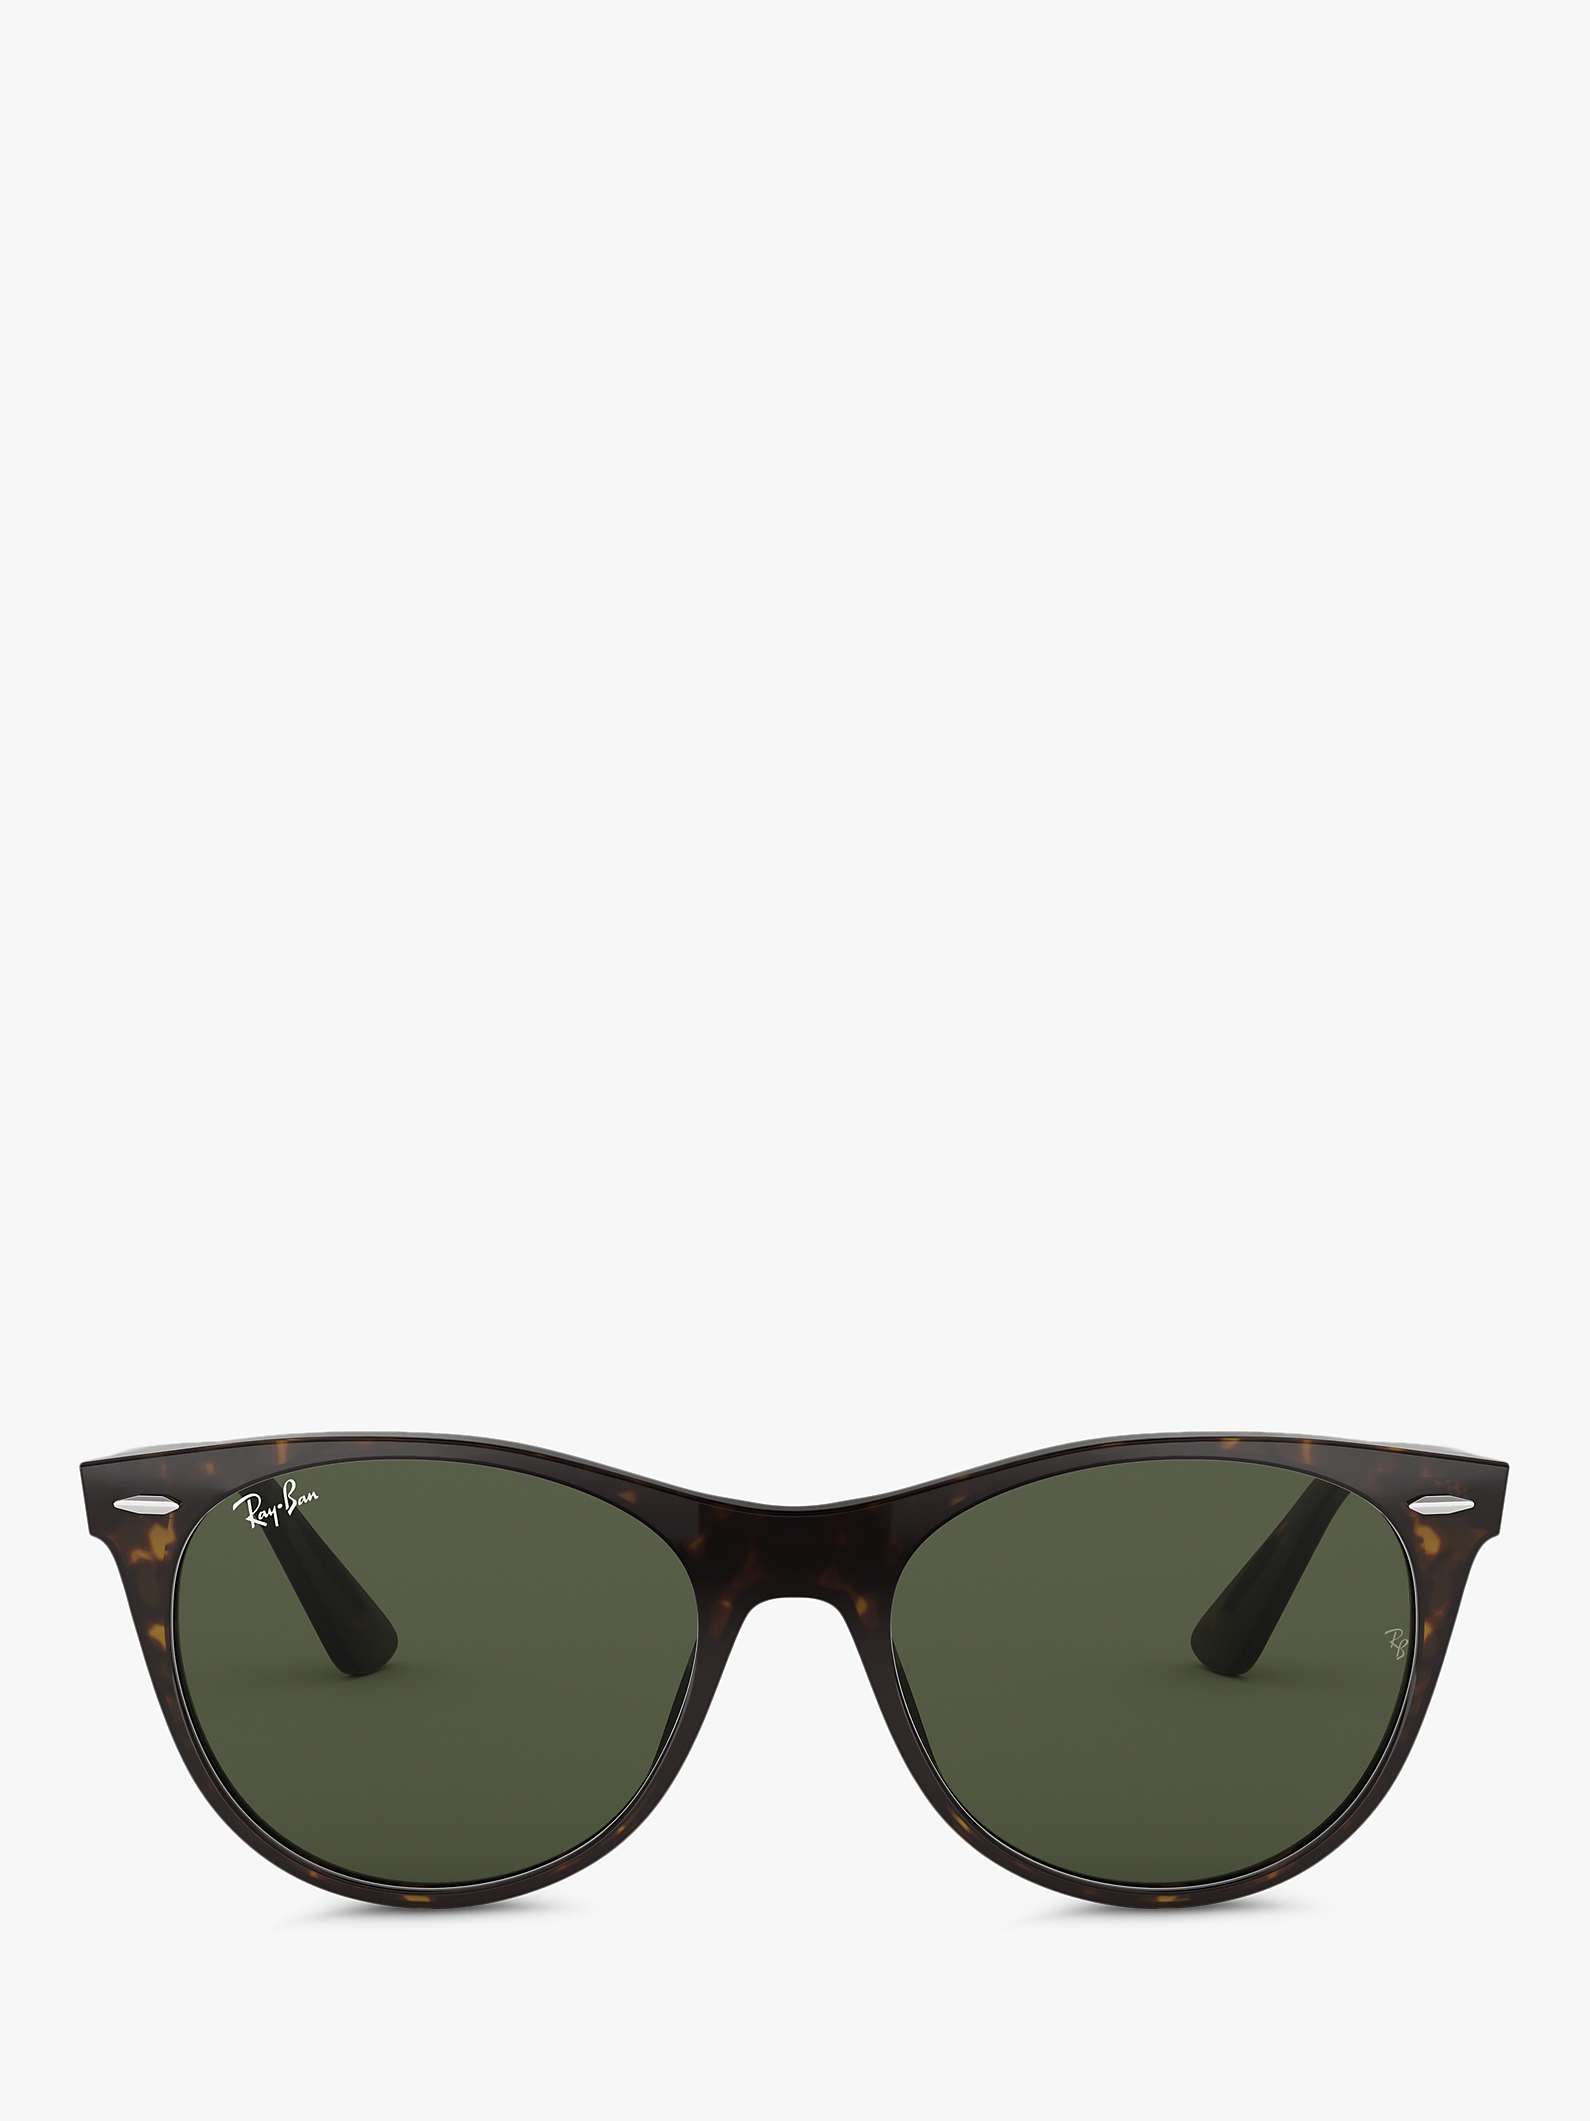 Buy Ray-Ban RB2185 Women's Wayfarer II Evolve Sunglasses Online at johnlewis.com